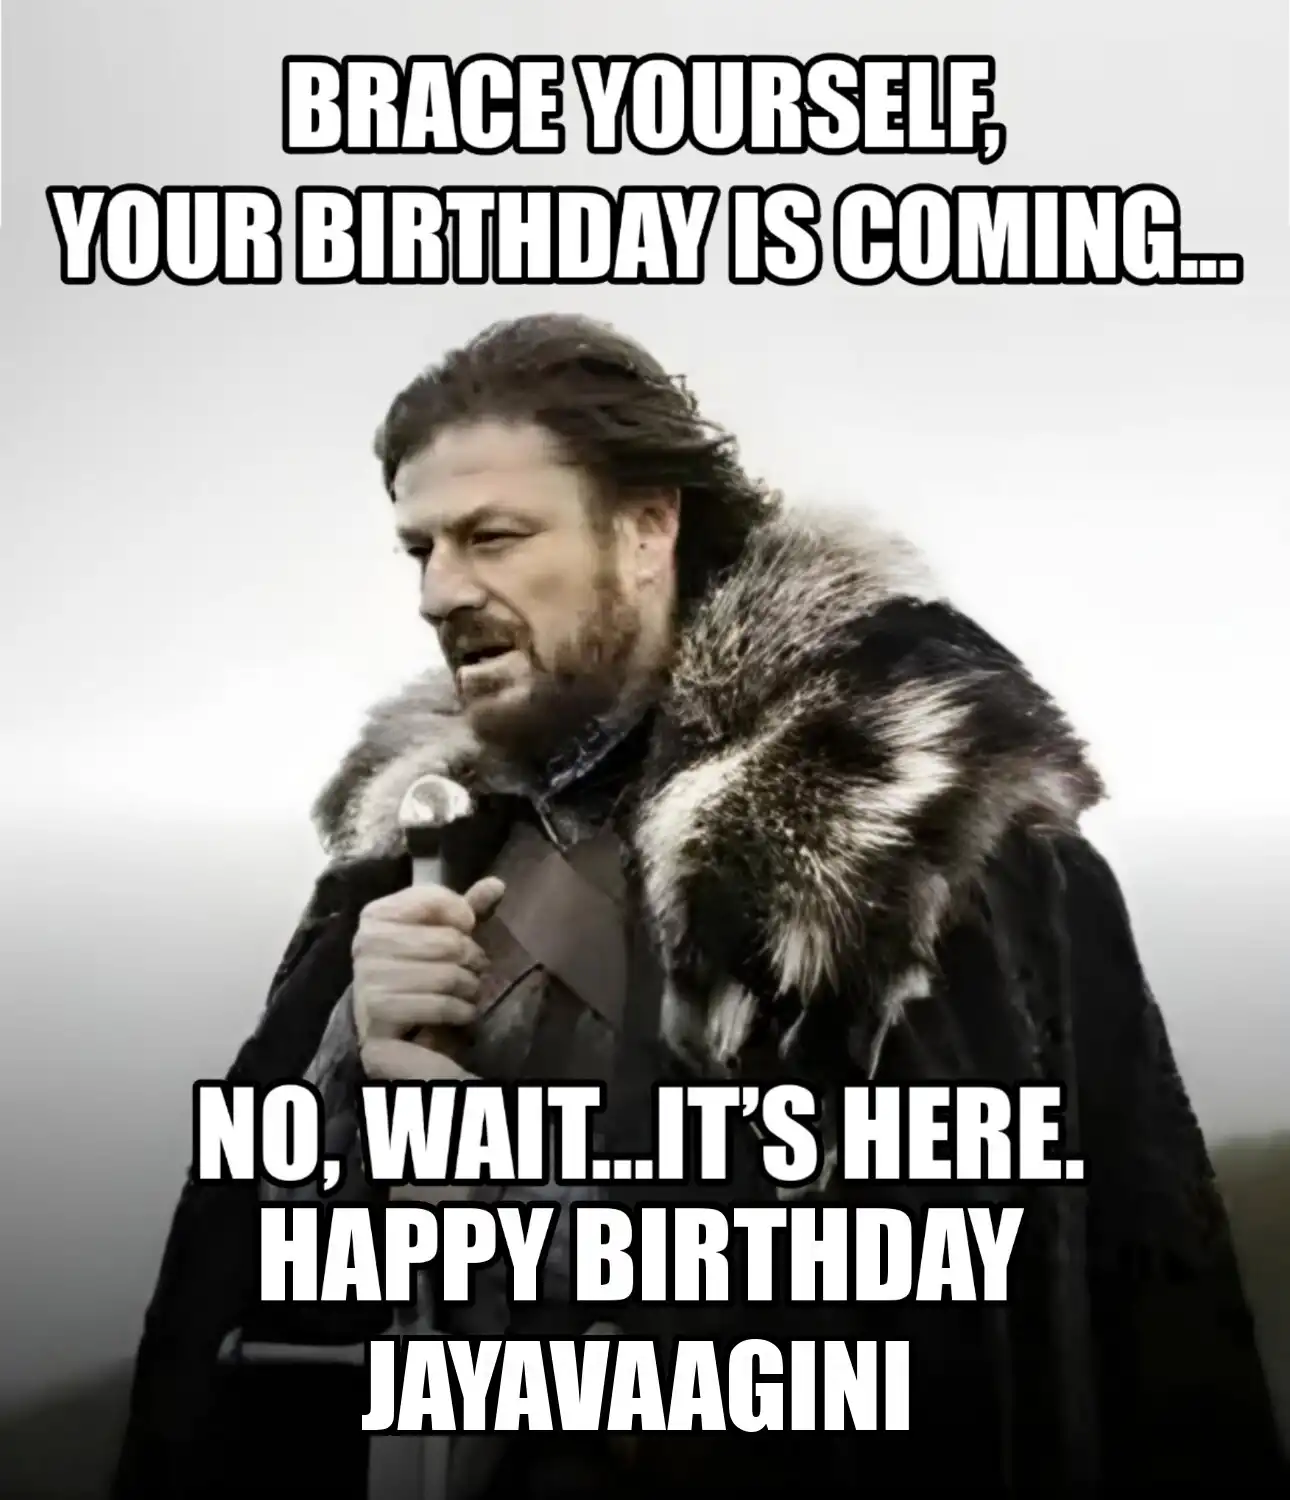 Happy Birthday Jayavaagini Brace Yourself Your Birthday Is Coming Meme